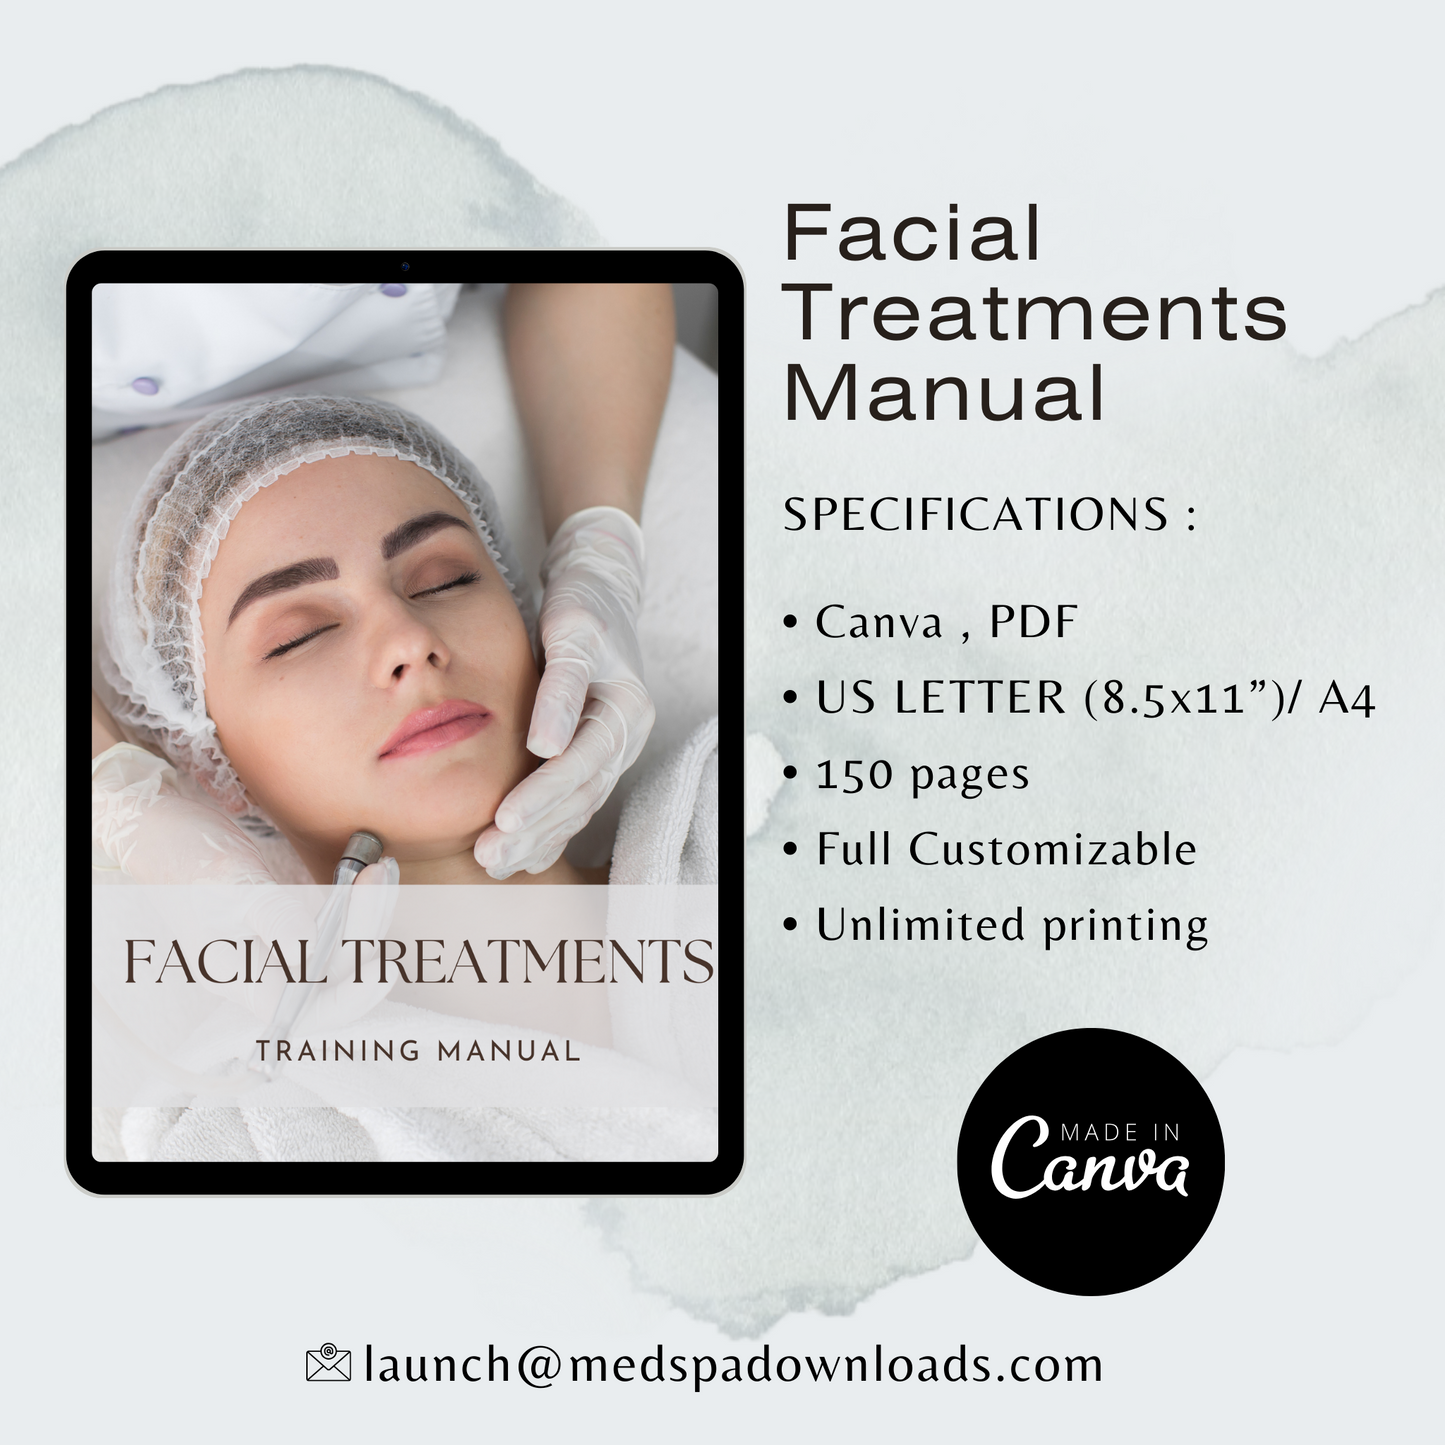 Facial Treatments Training Manual